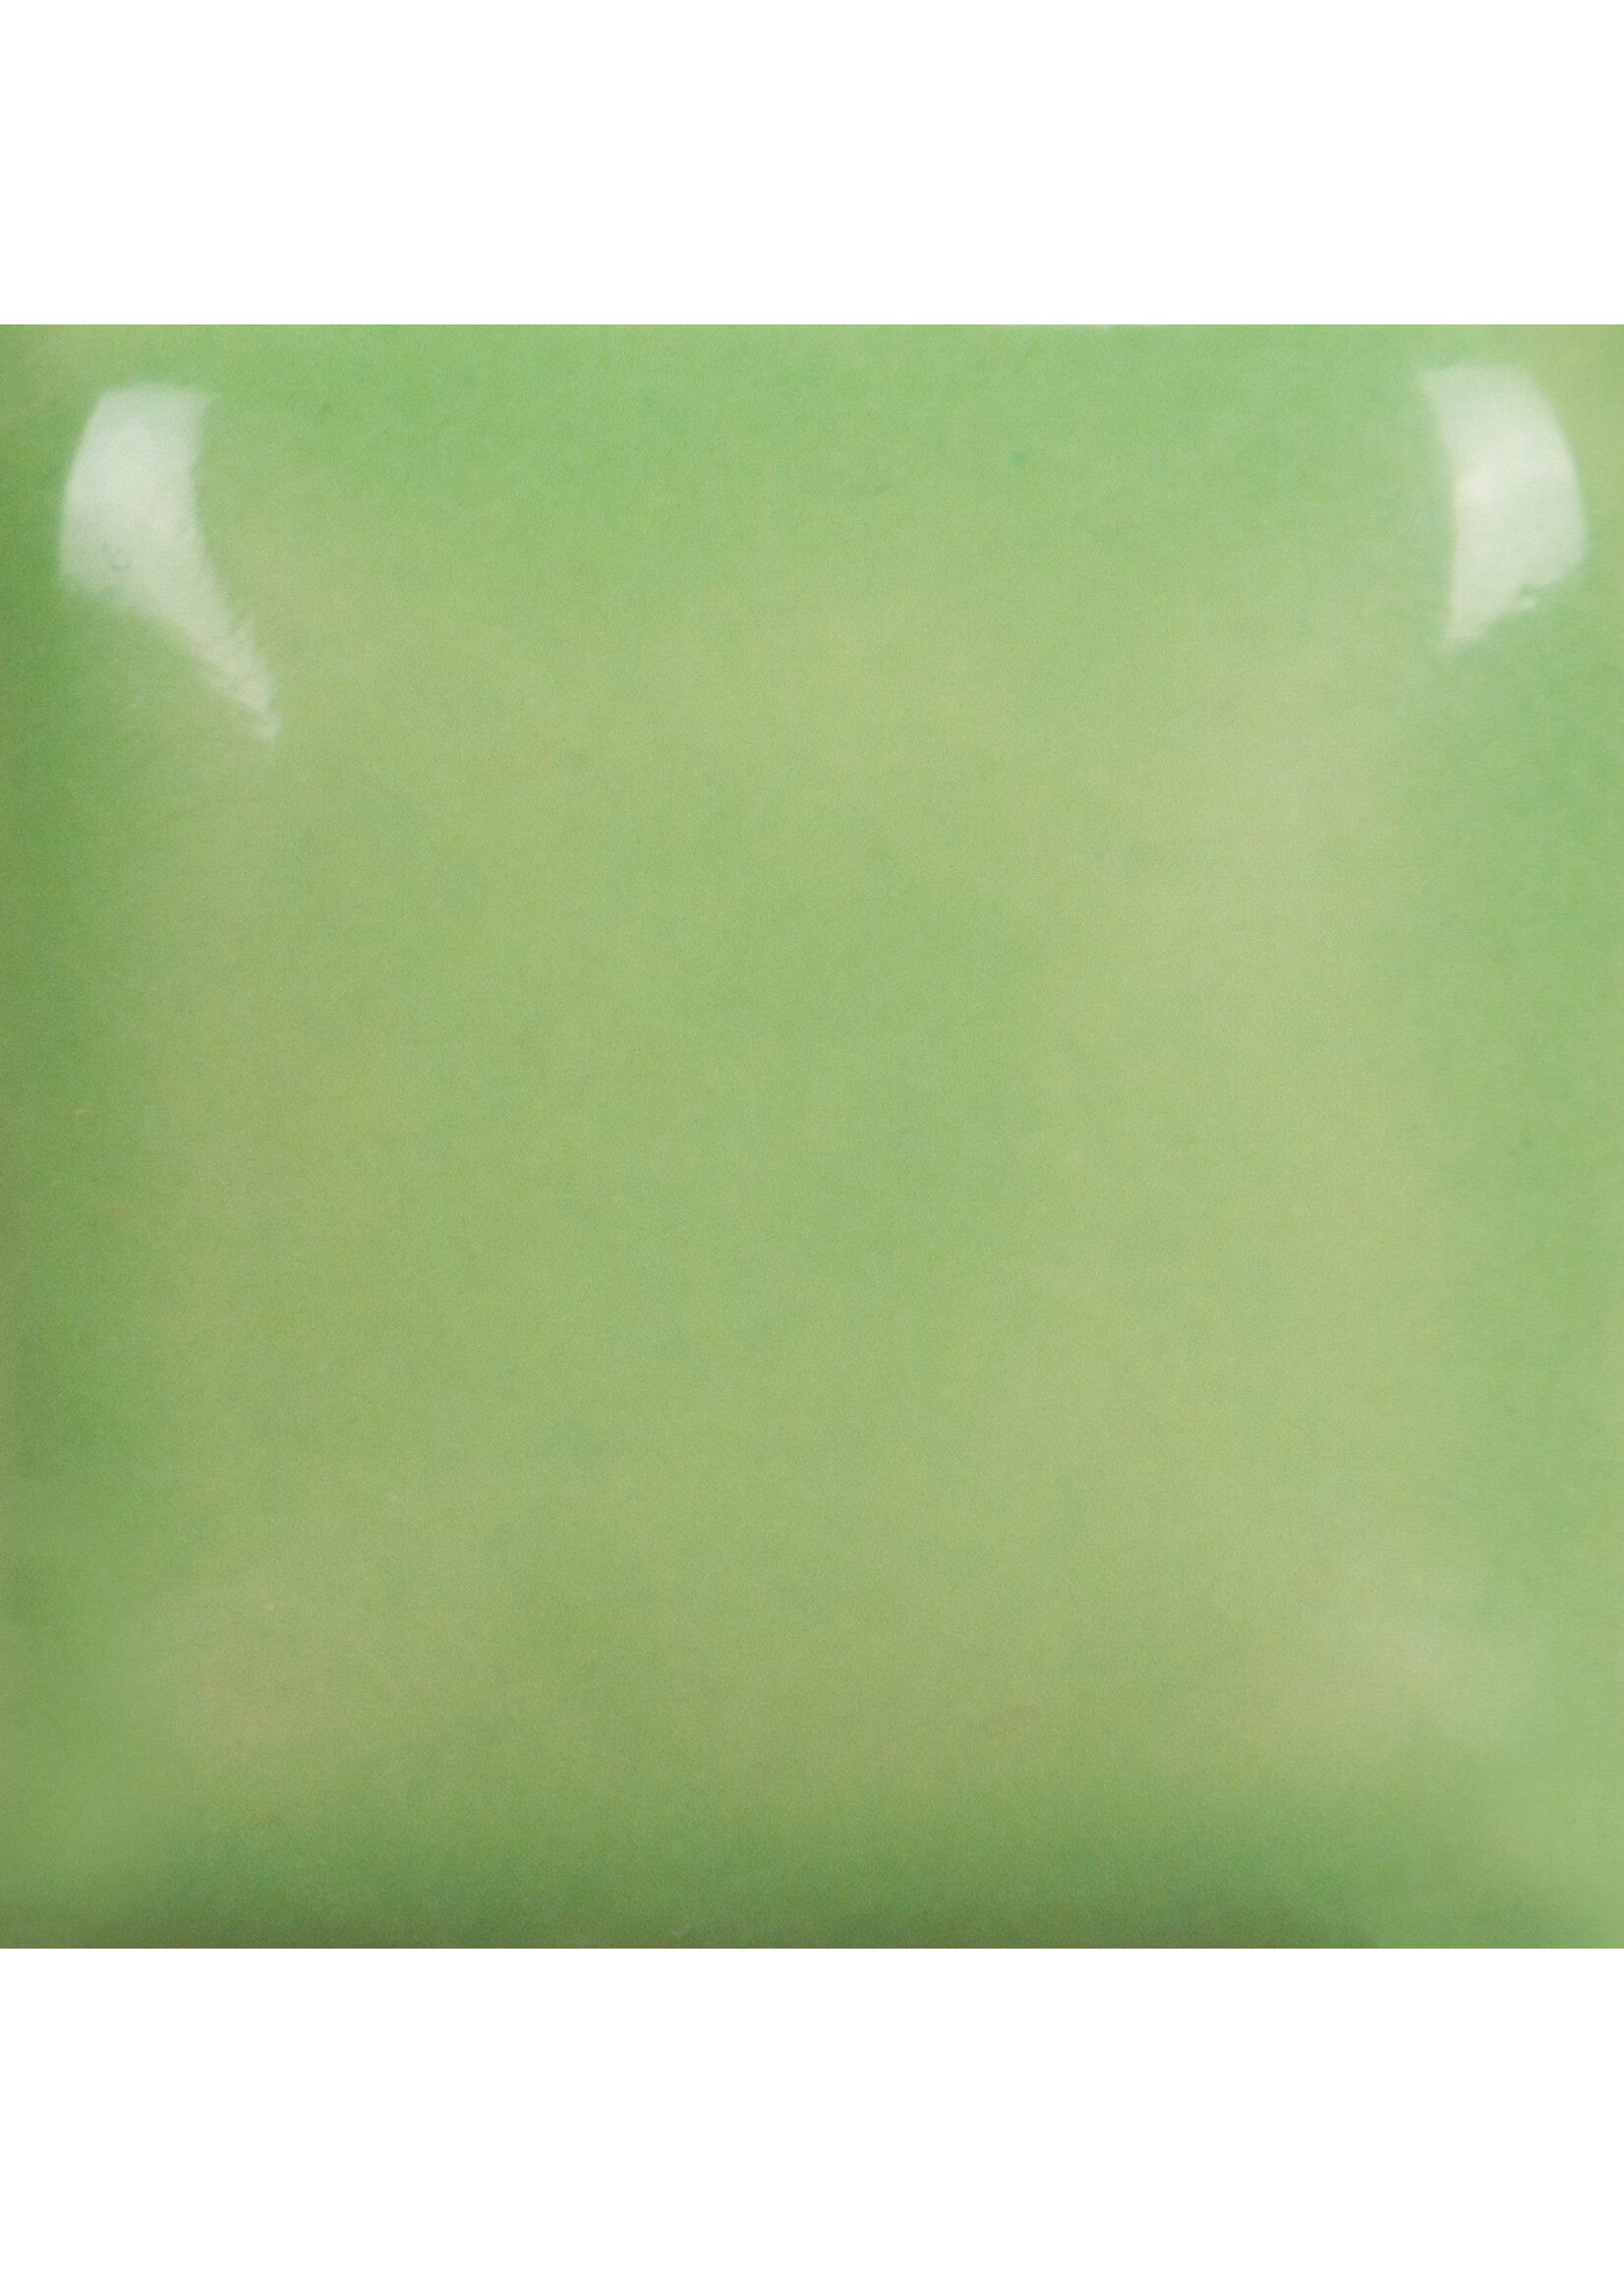 Mayco Green Apple 118ml